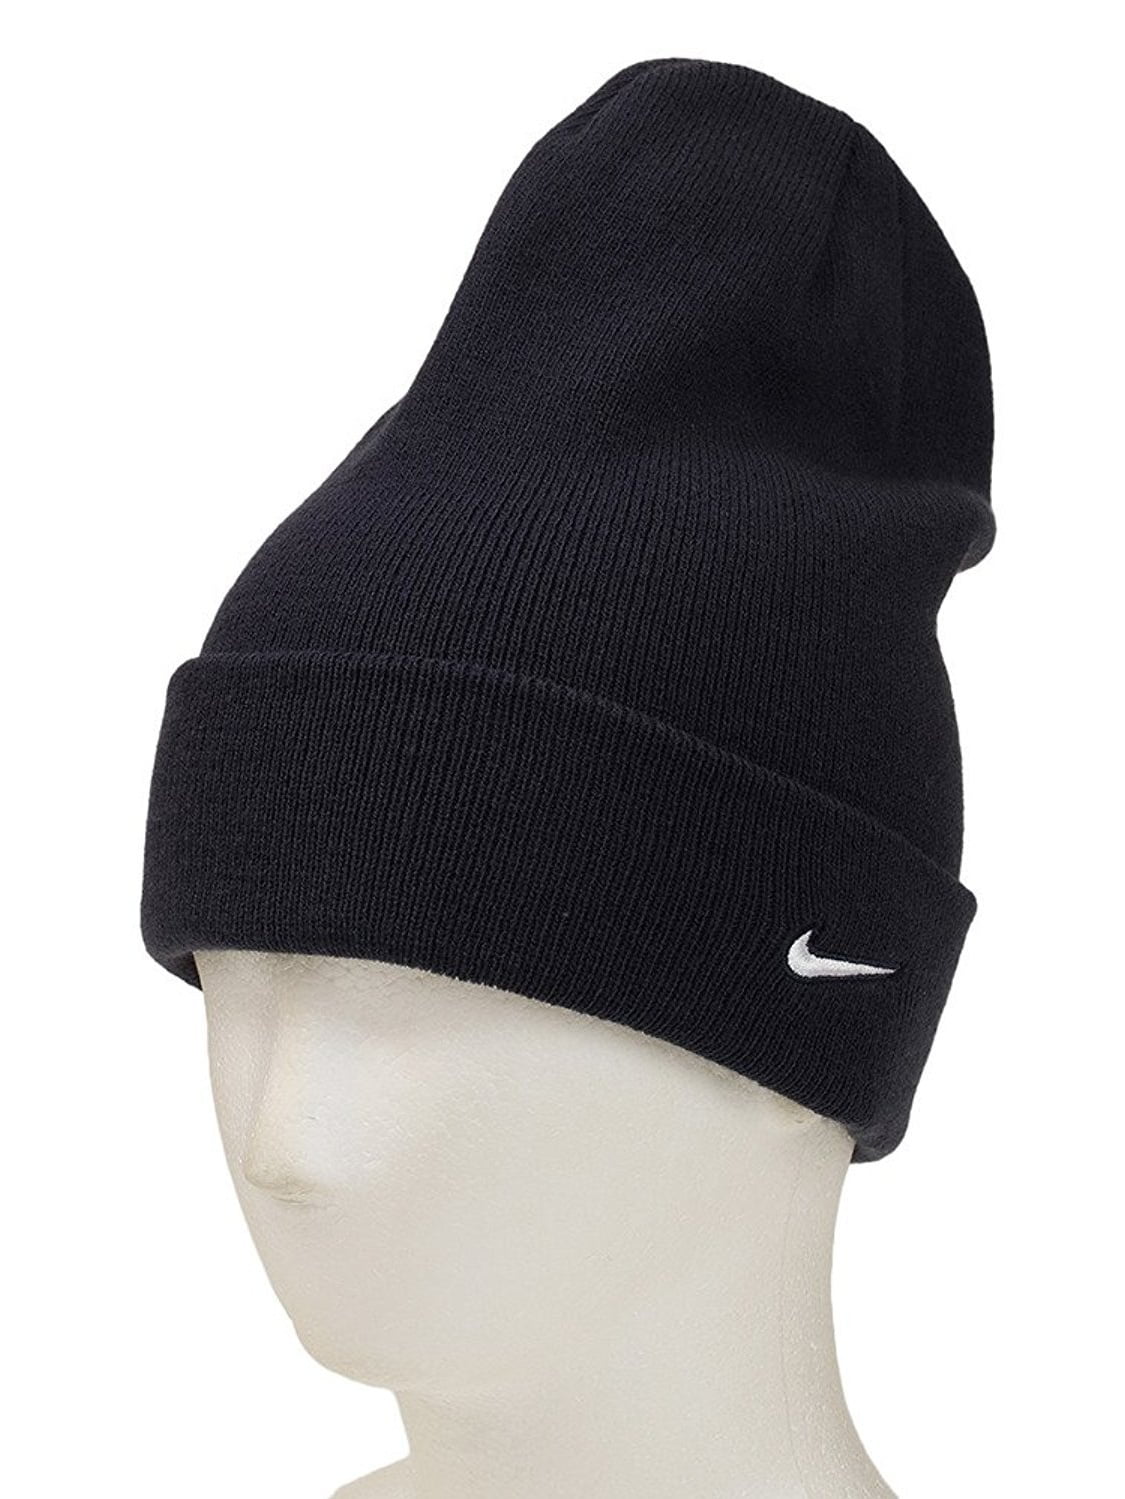 Nike Stock Cuffed Knit Beanie - Walmart.com